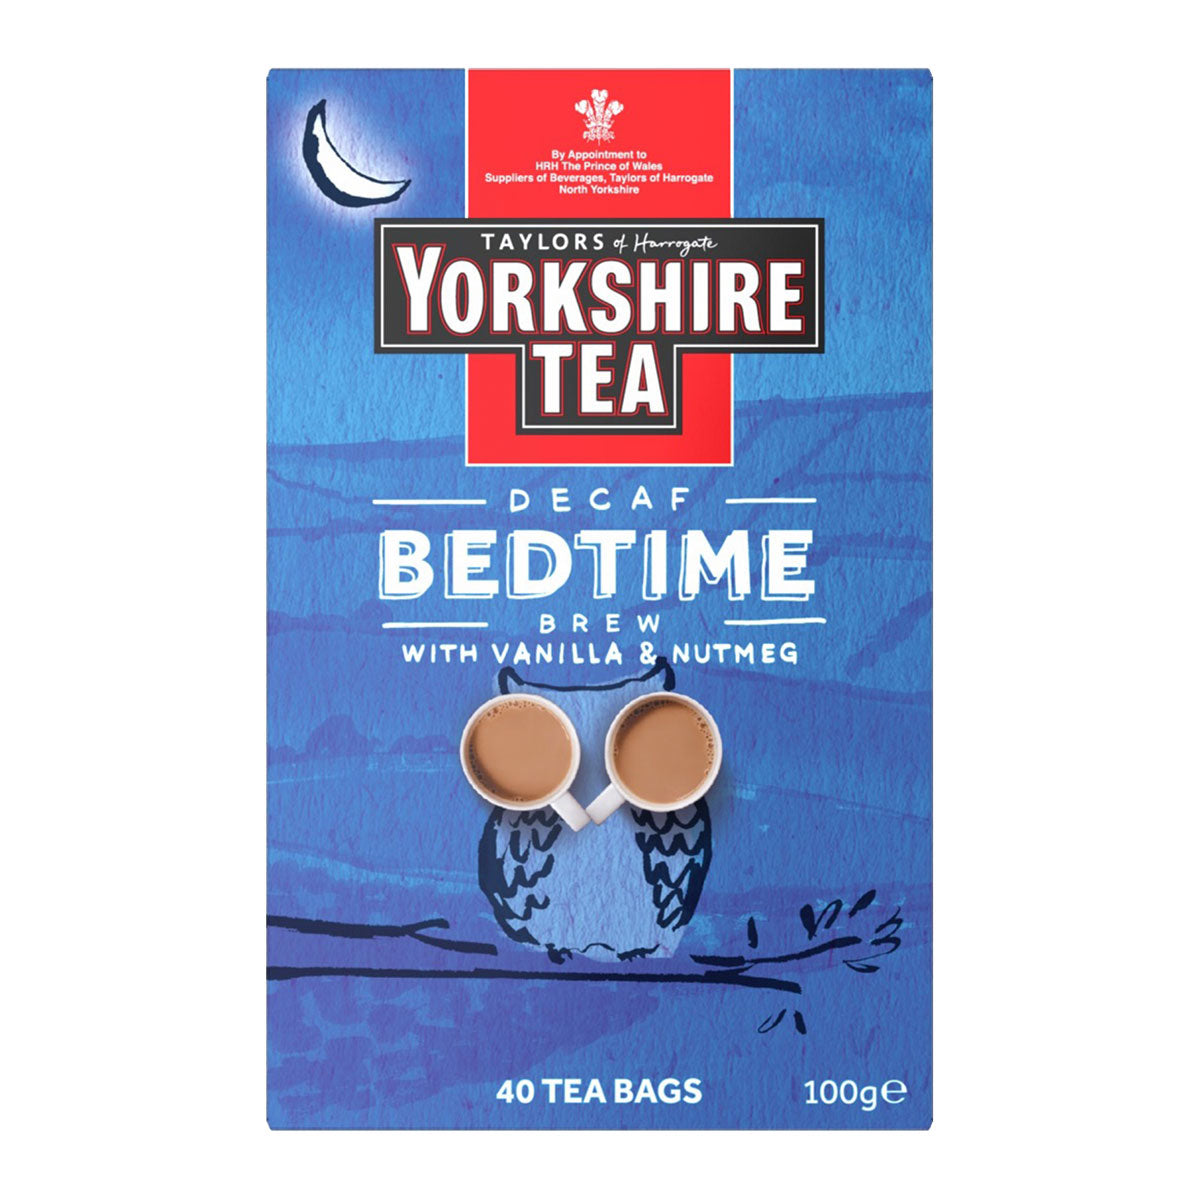 Taylors Yorkshire Bedtime Tea 40bags